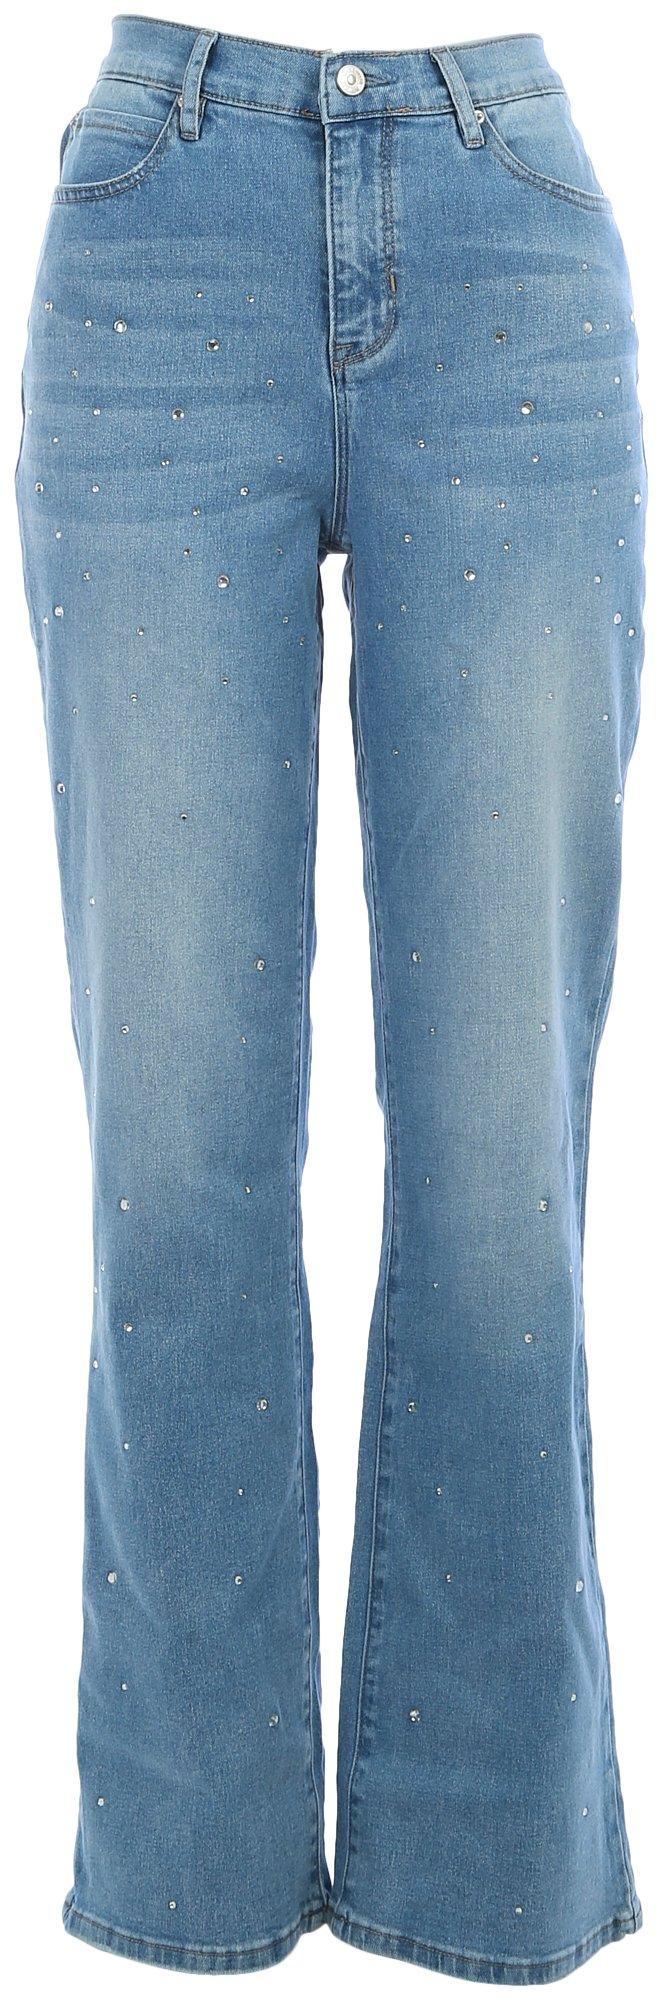 Womens Boot Cut Jeans